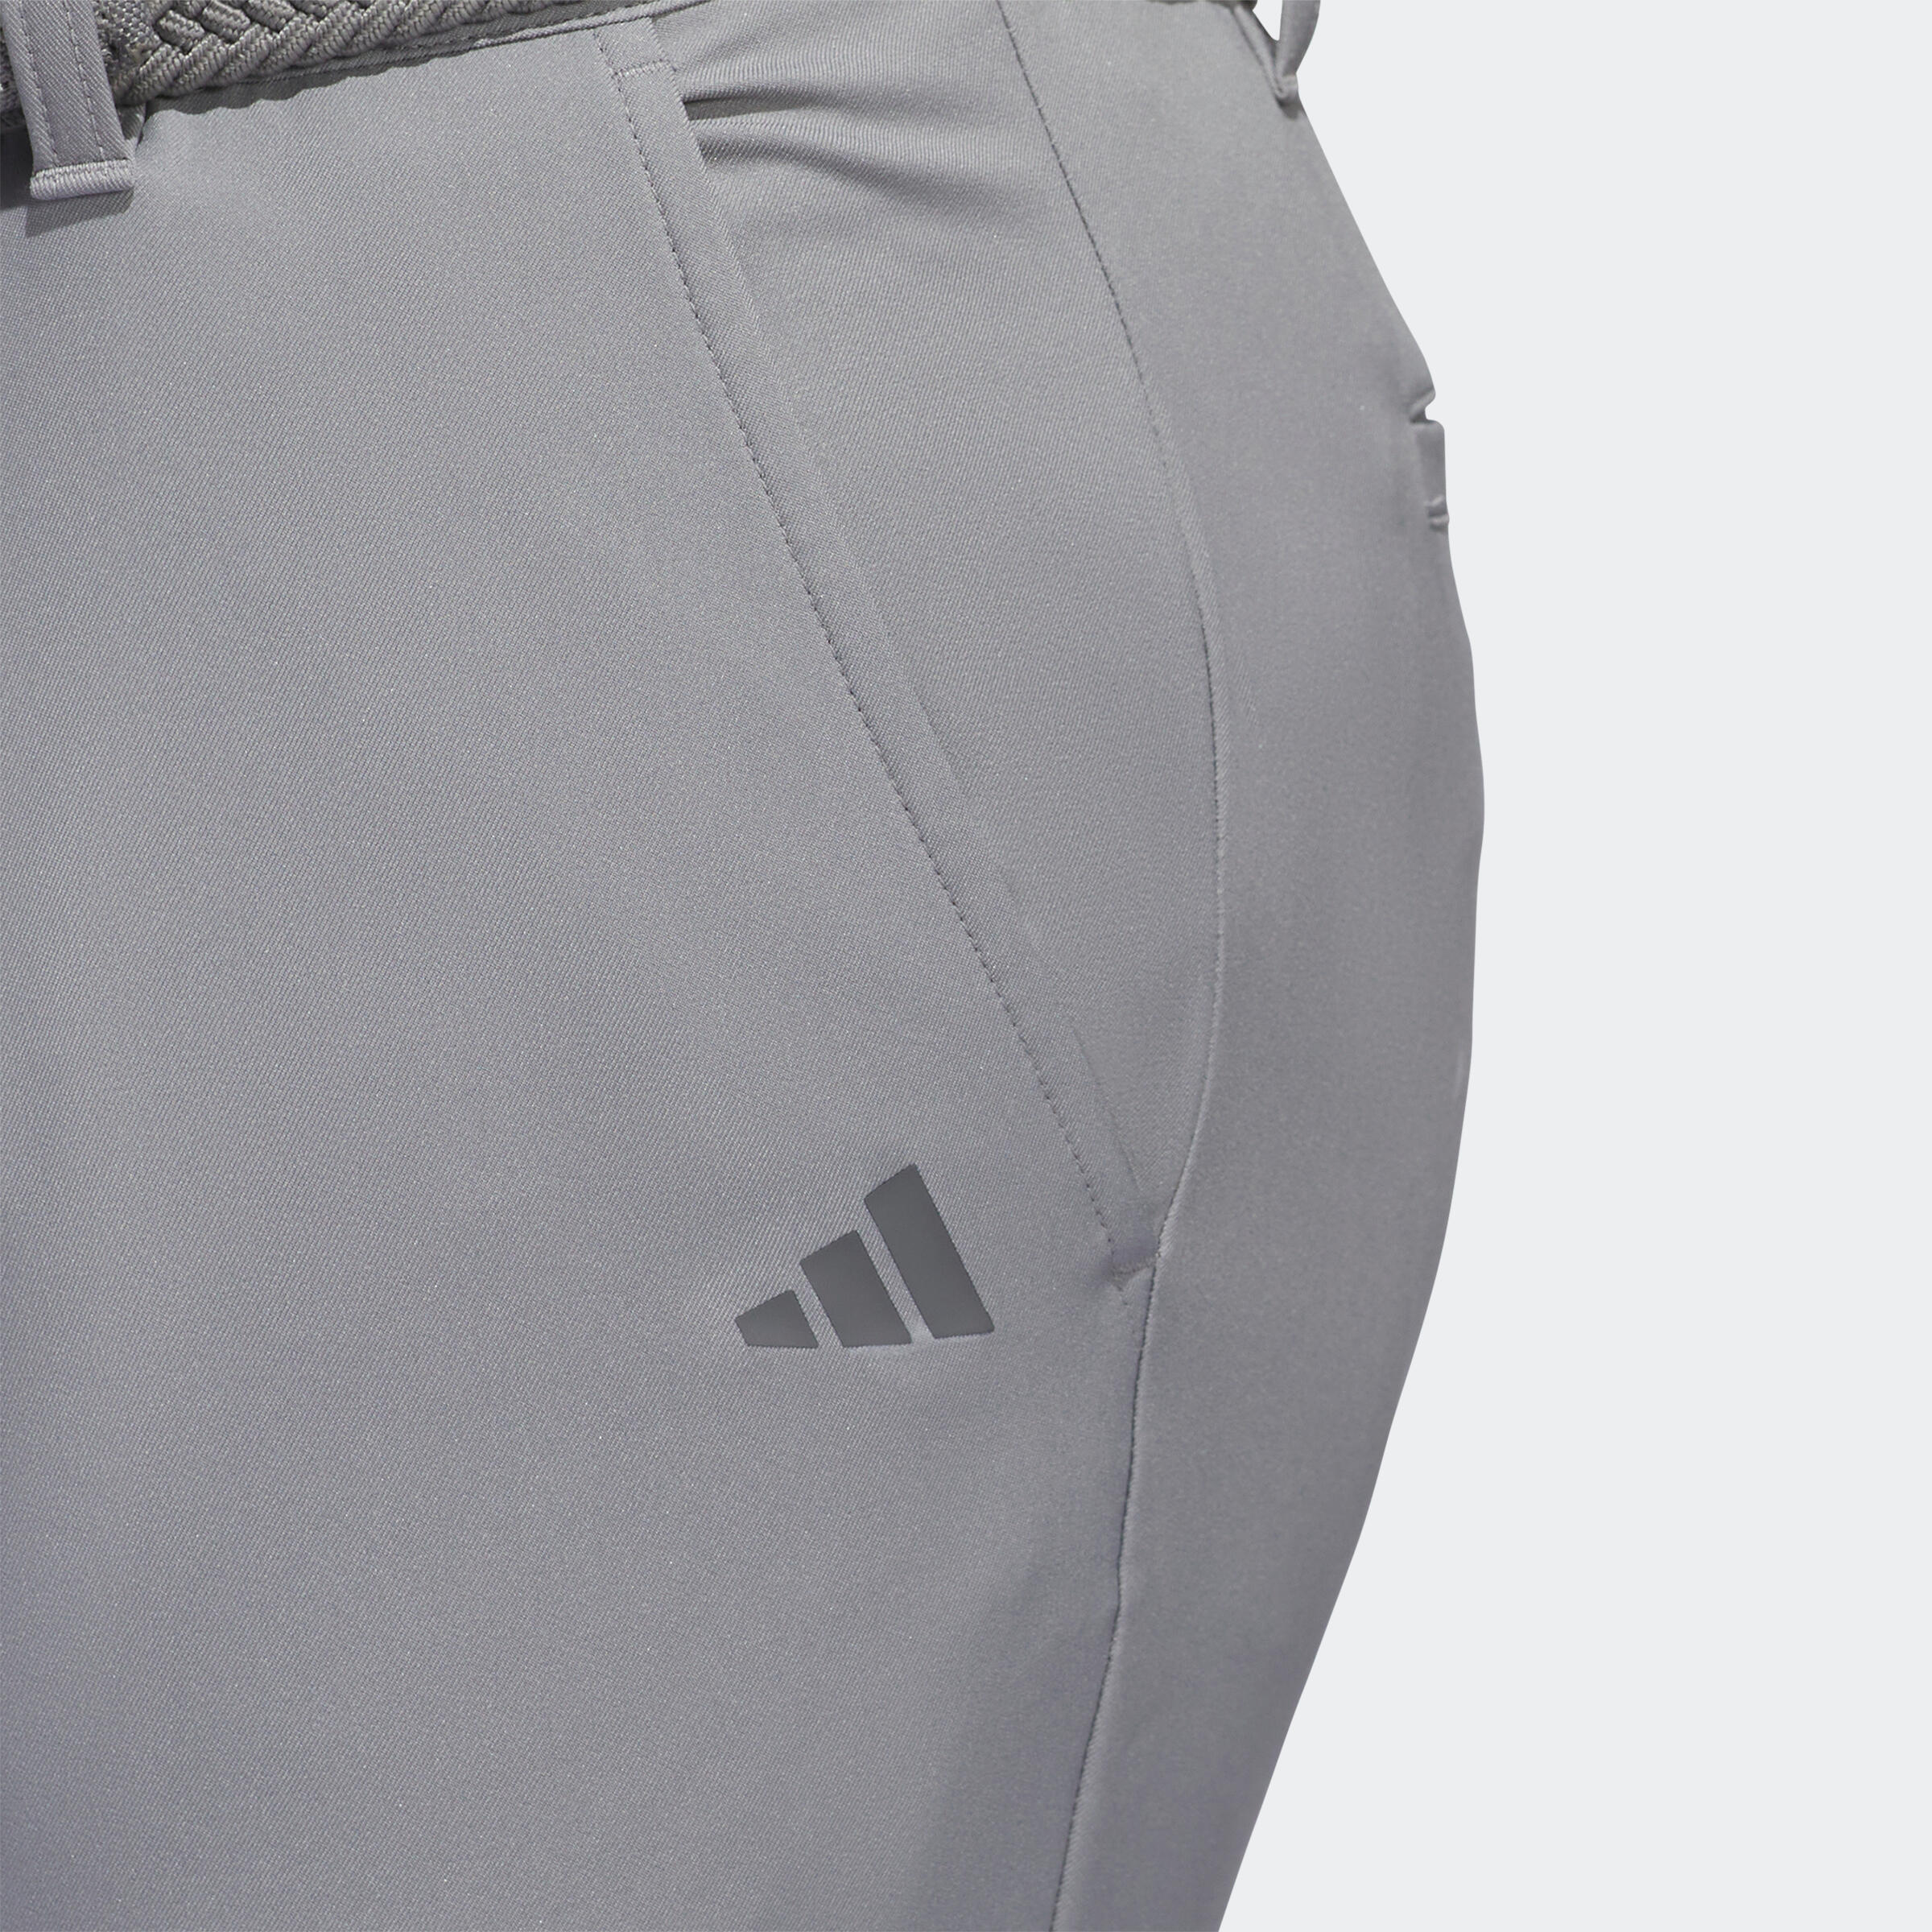 Men's golf trousers - Adidas grey 4/4